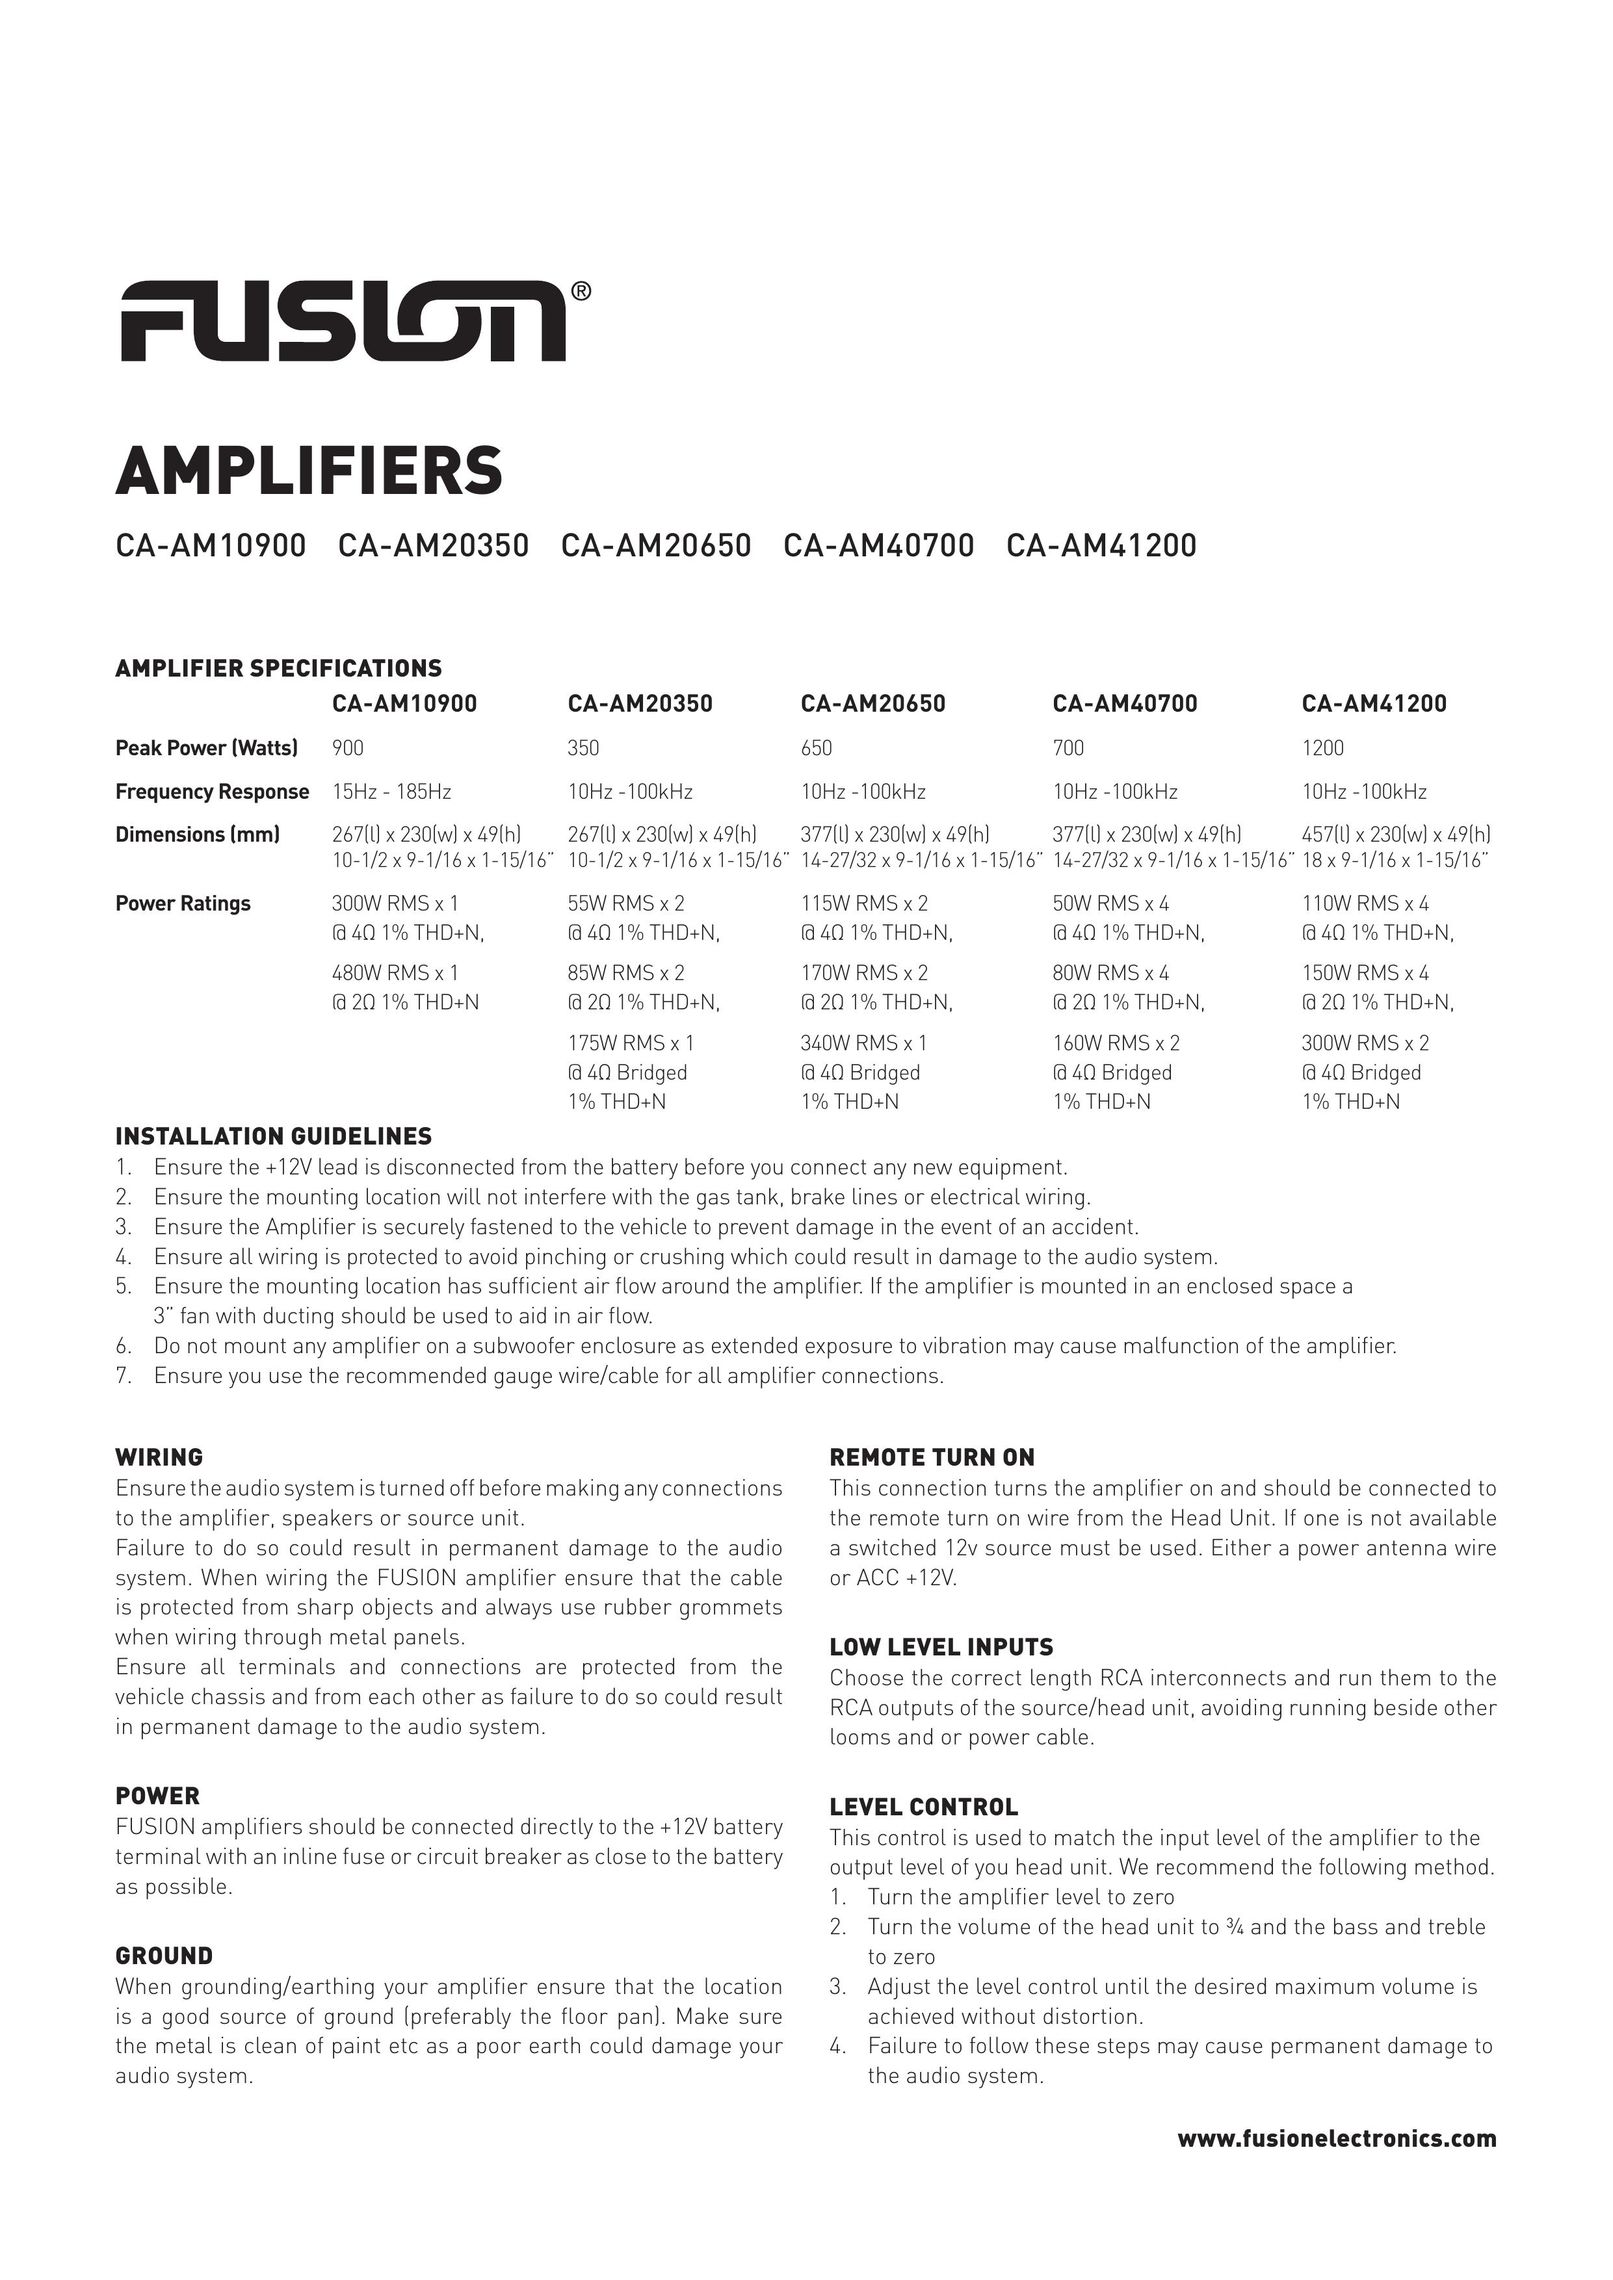 Fusion CA-AM20650 Car Amplifier User Manual